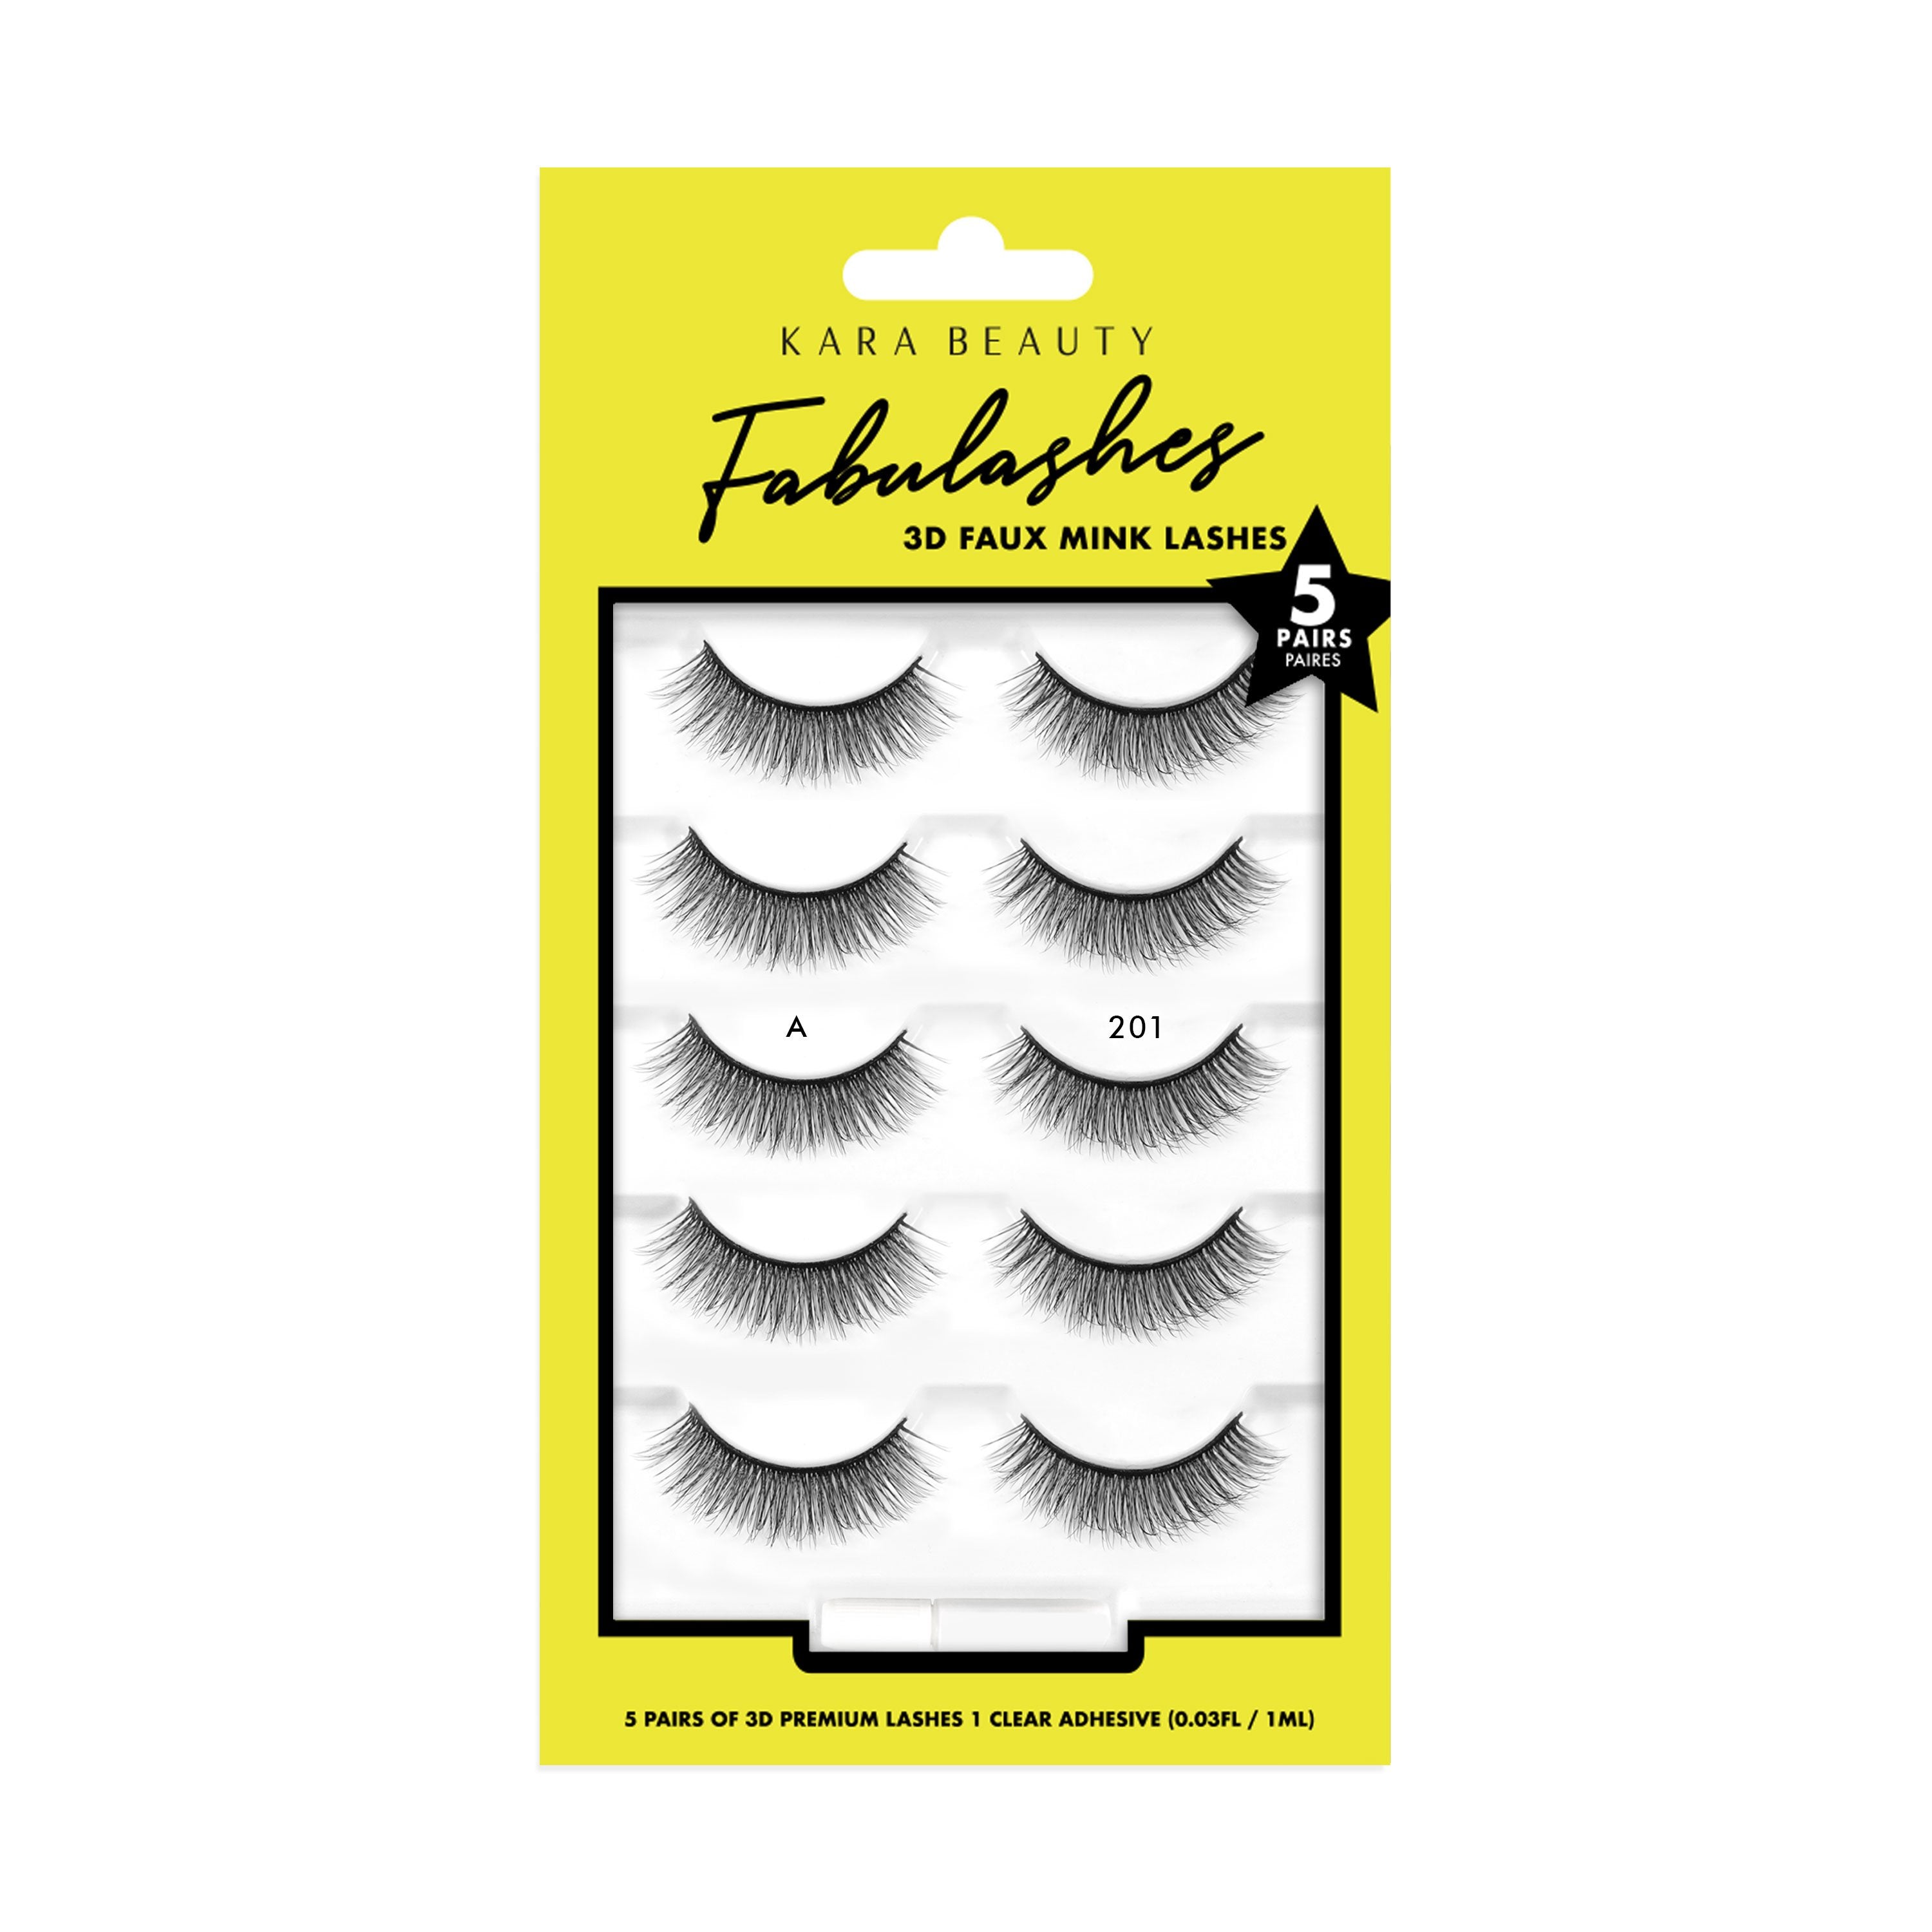 Fabulashes 3D faux mink eyelashes in 5 pair multi-pack